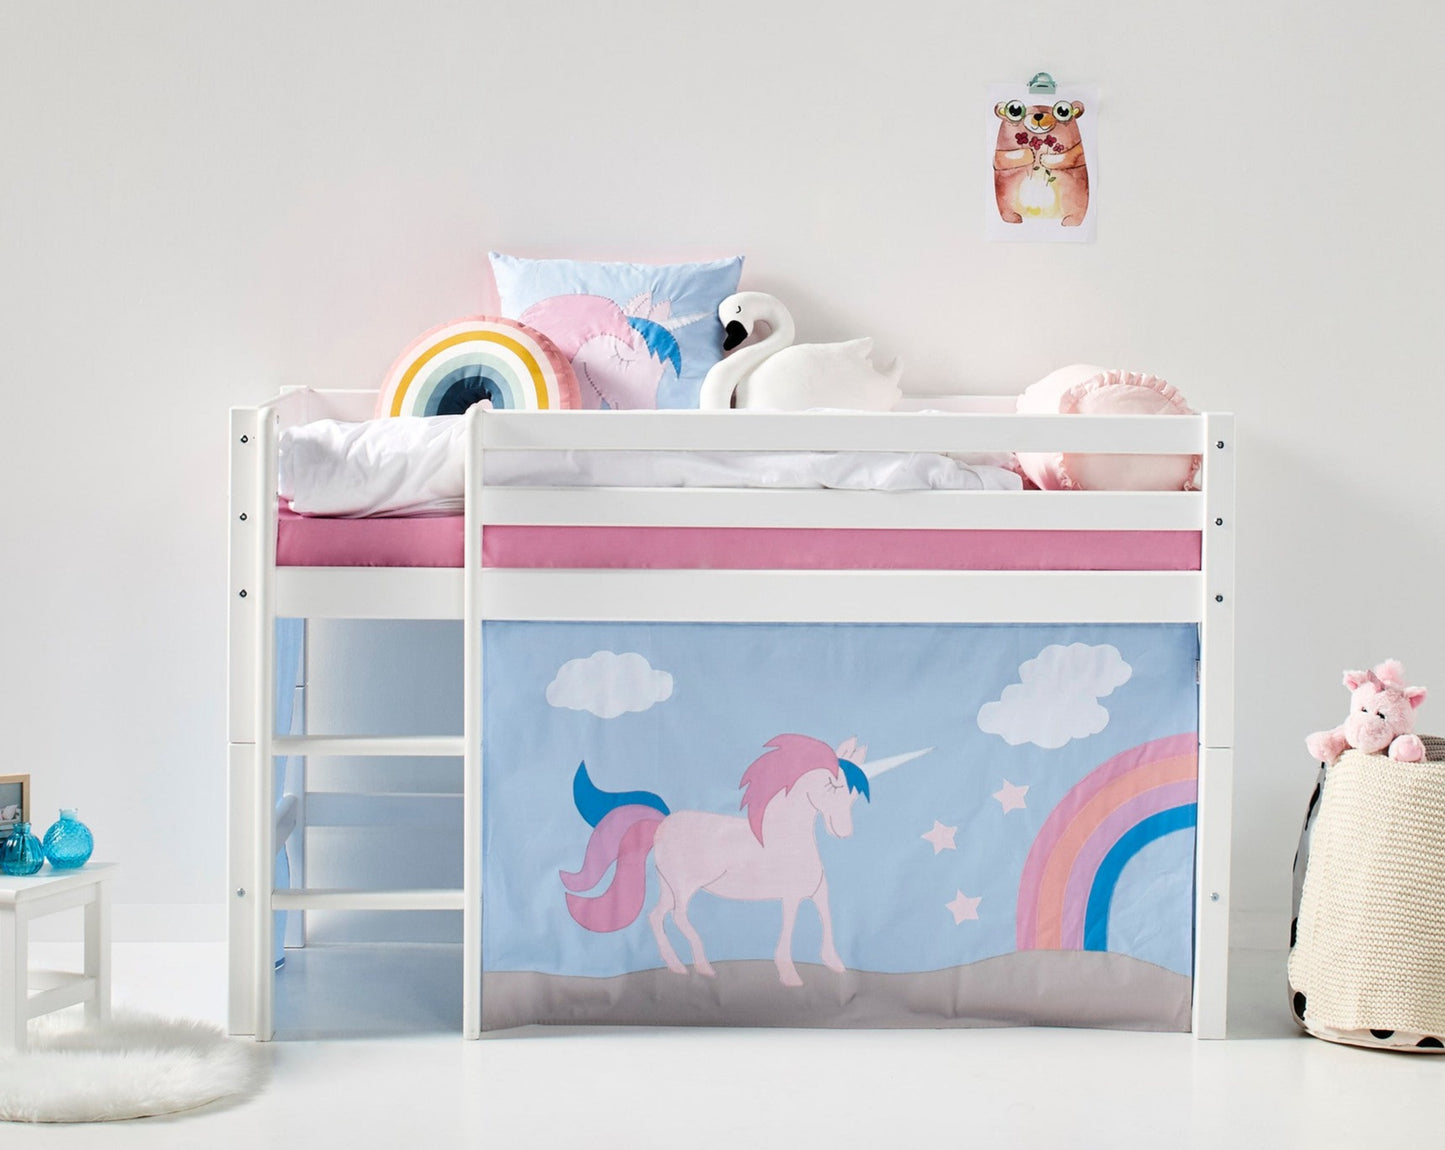 Unicorn - Cushion set - 2 pillows - 50x50 cm